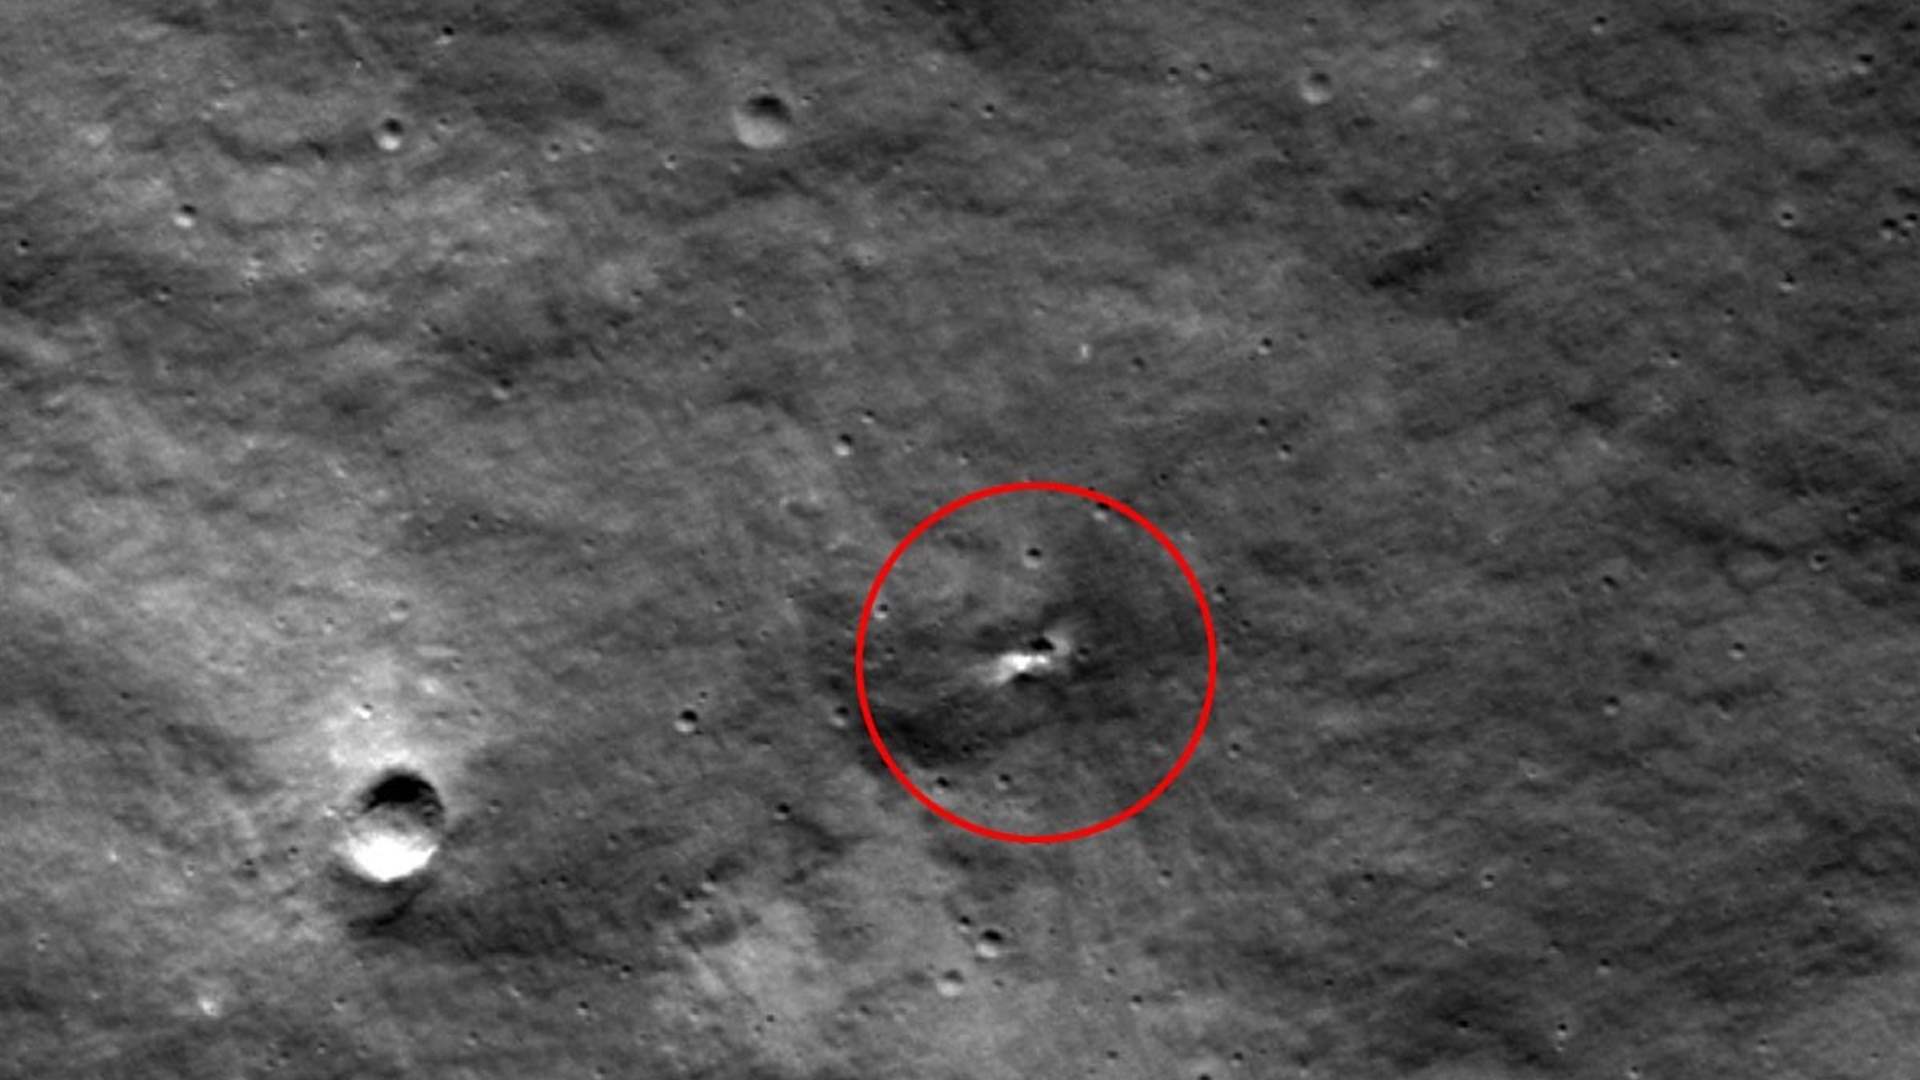 &quot;ناسا&quot; تعثر على حفرة جديدة على سطح القمر... كيف تشكّلت؟ (صورة)